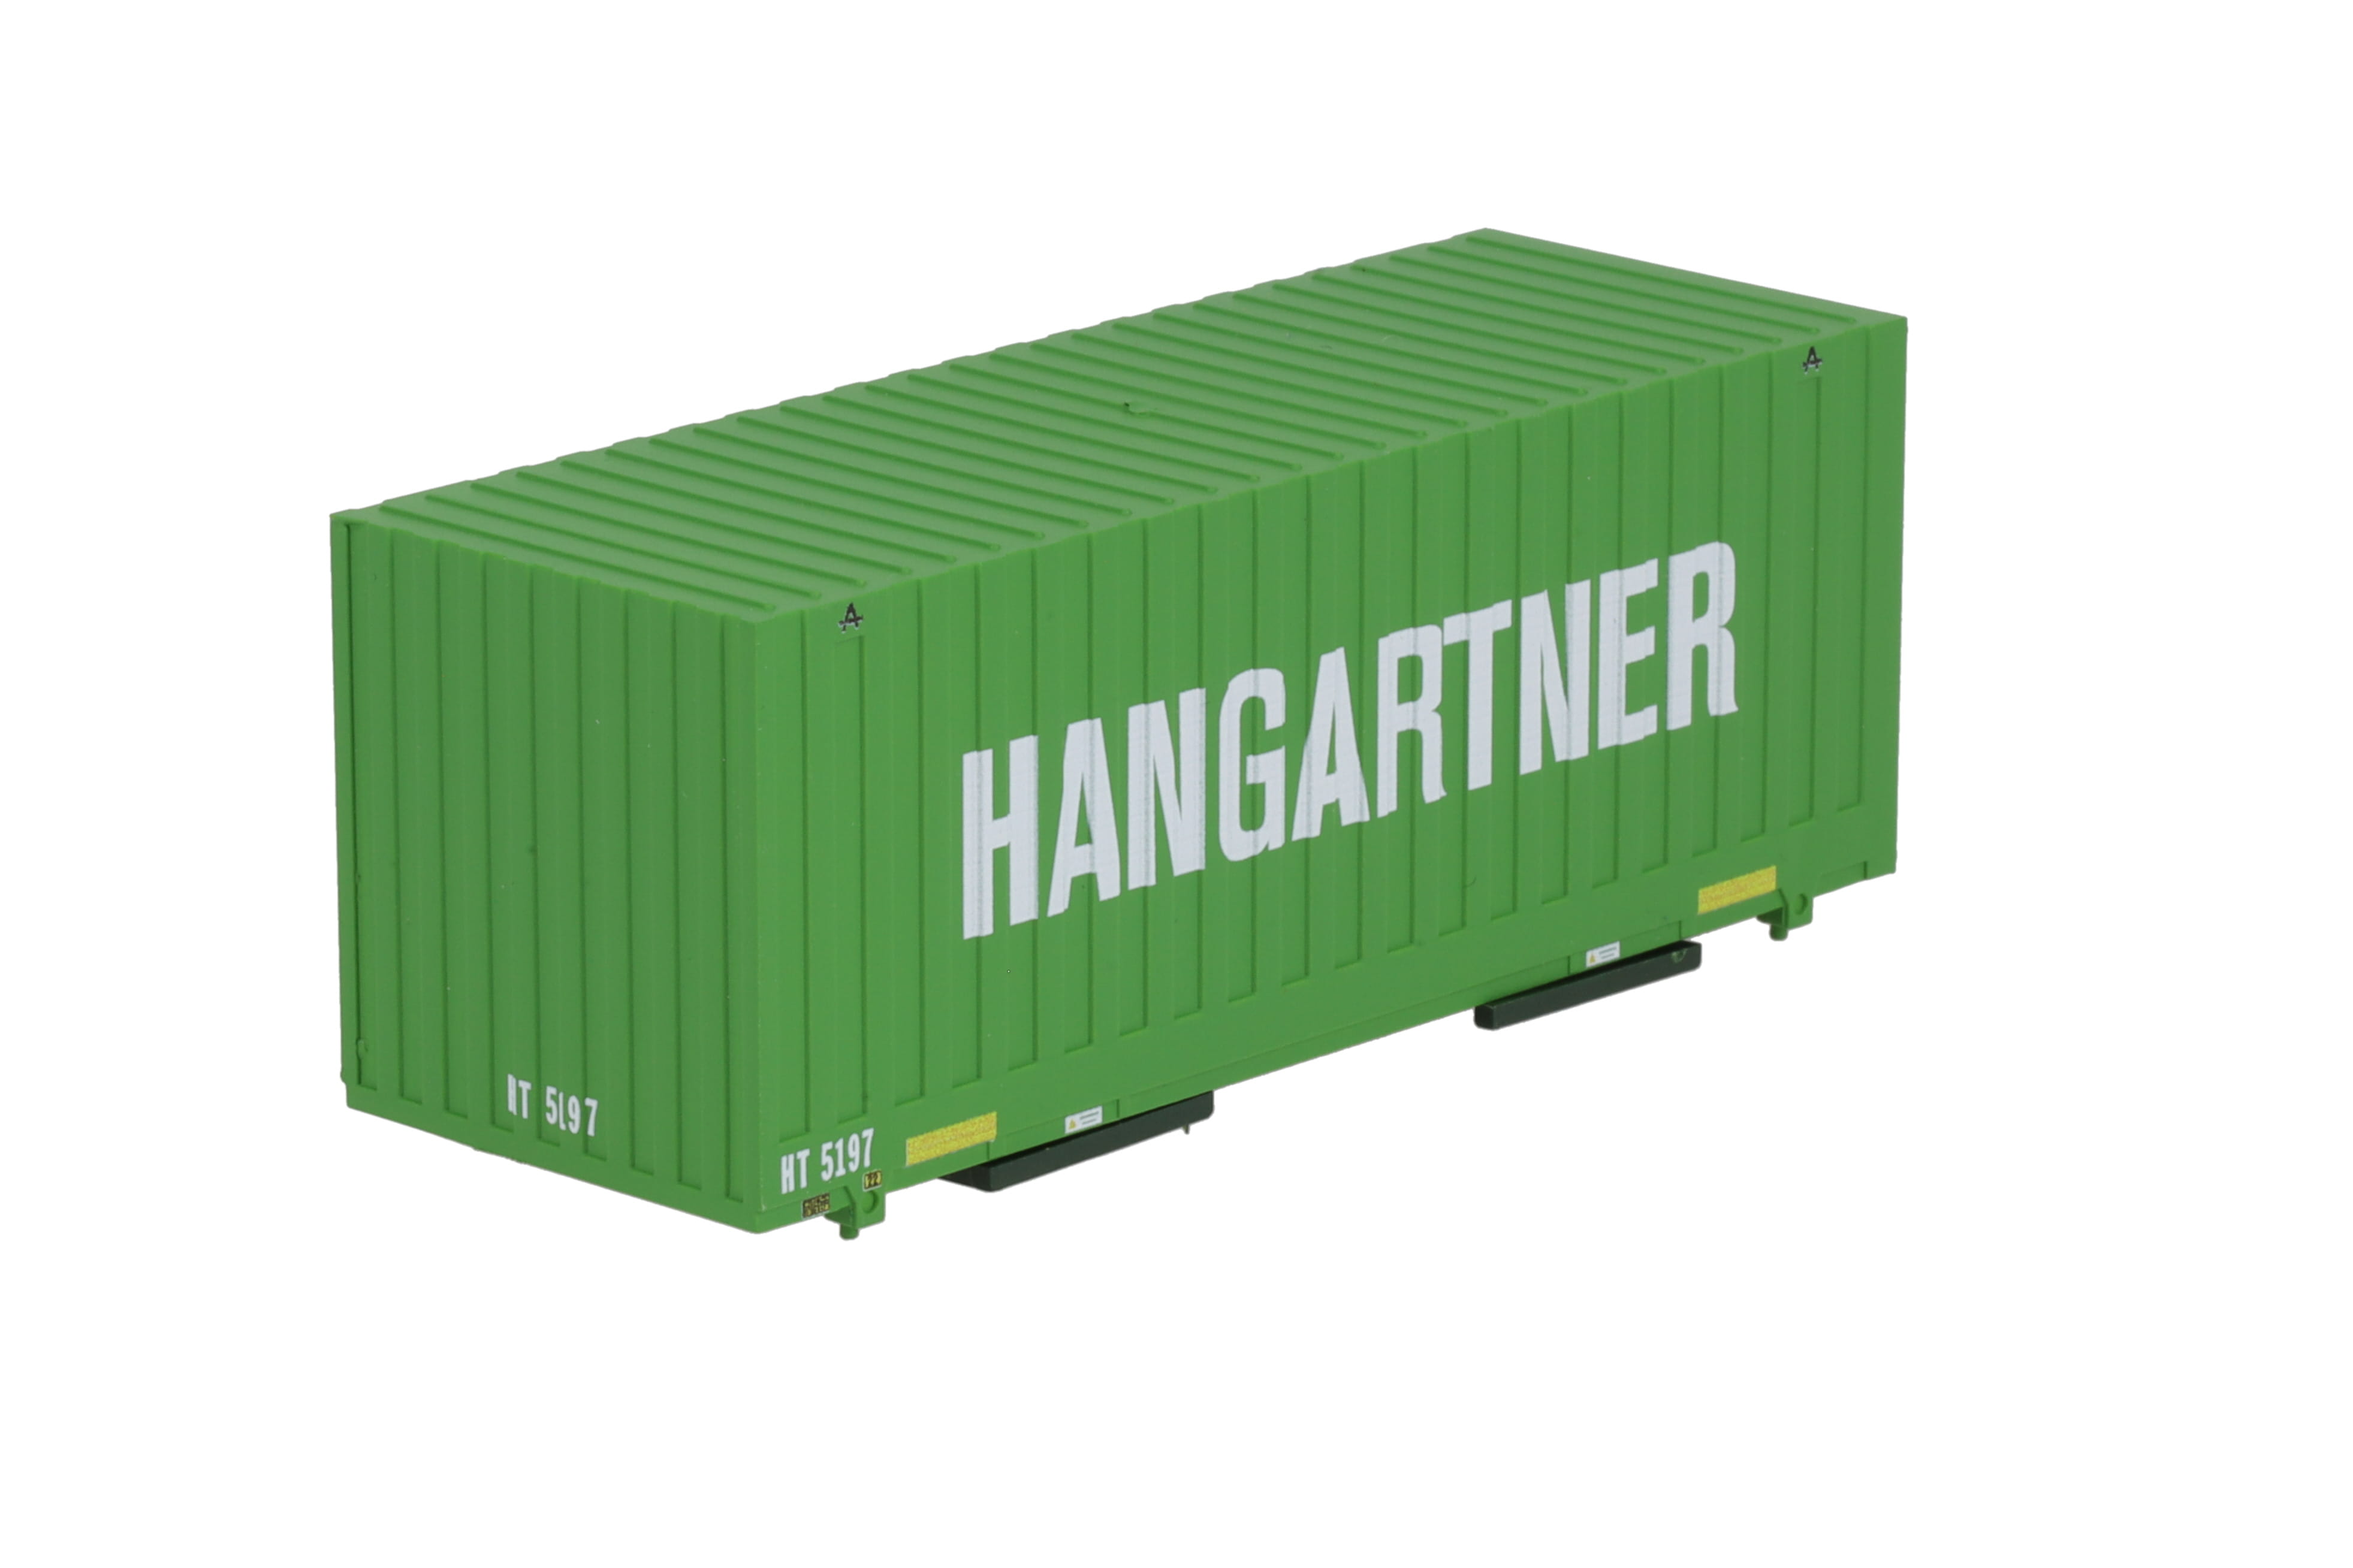 1:87 Container WB-C715 HANGAR Wechselbehälter WB-C 715 Thyssen Cargo-Box, Aufschrift: HANGARTNER, grün, Behälter-Nr: HT 5197